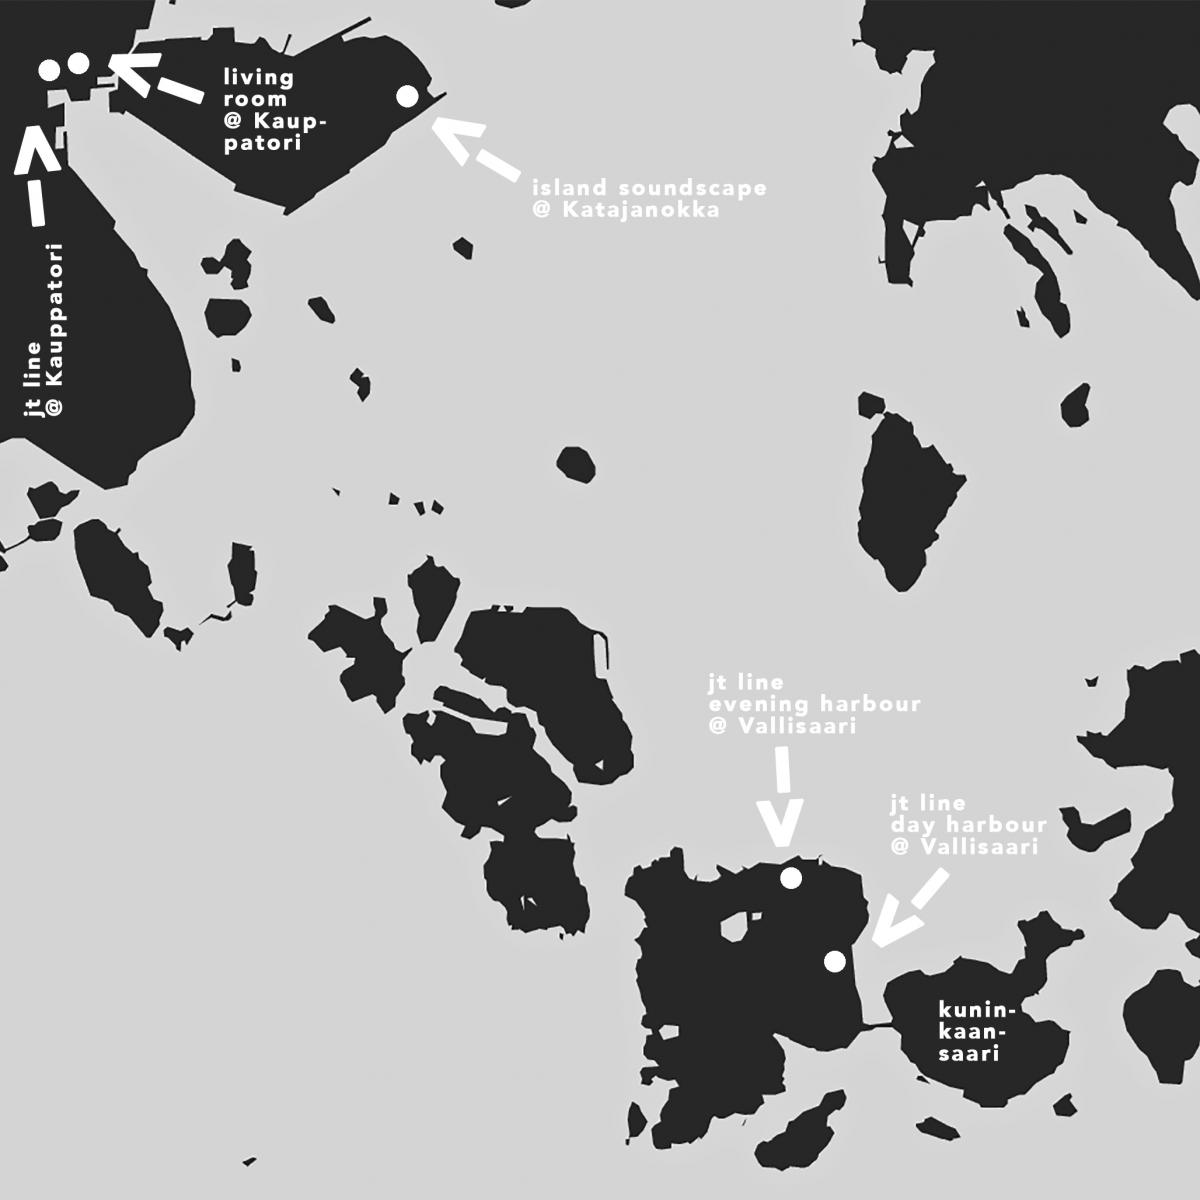 Lapsody festival’s map that shows festival’s locations in the Helsinki Market Square, Katajanokka, on Vallisaari island and on Kuninkaansaari island. The map also points the entrance and exit piers of the ferry to Vallisaari island.